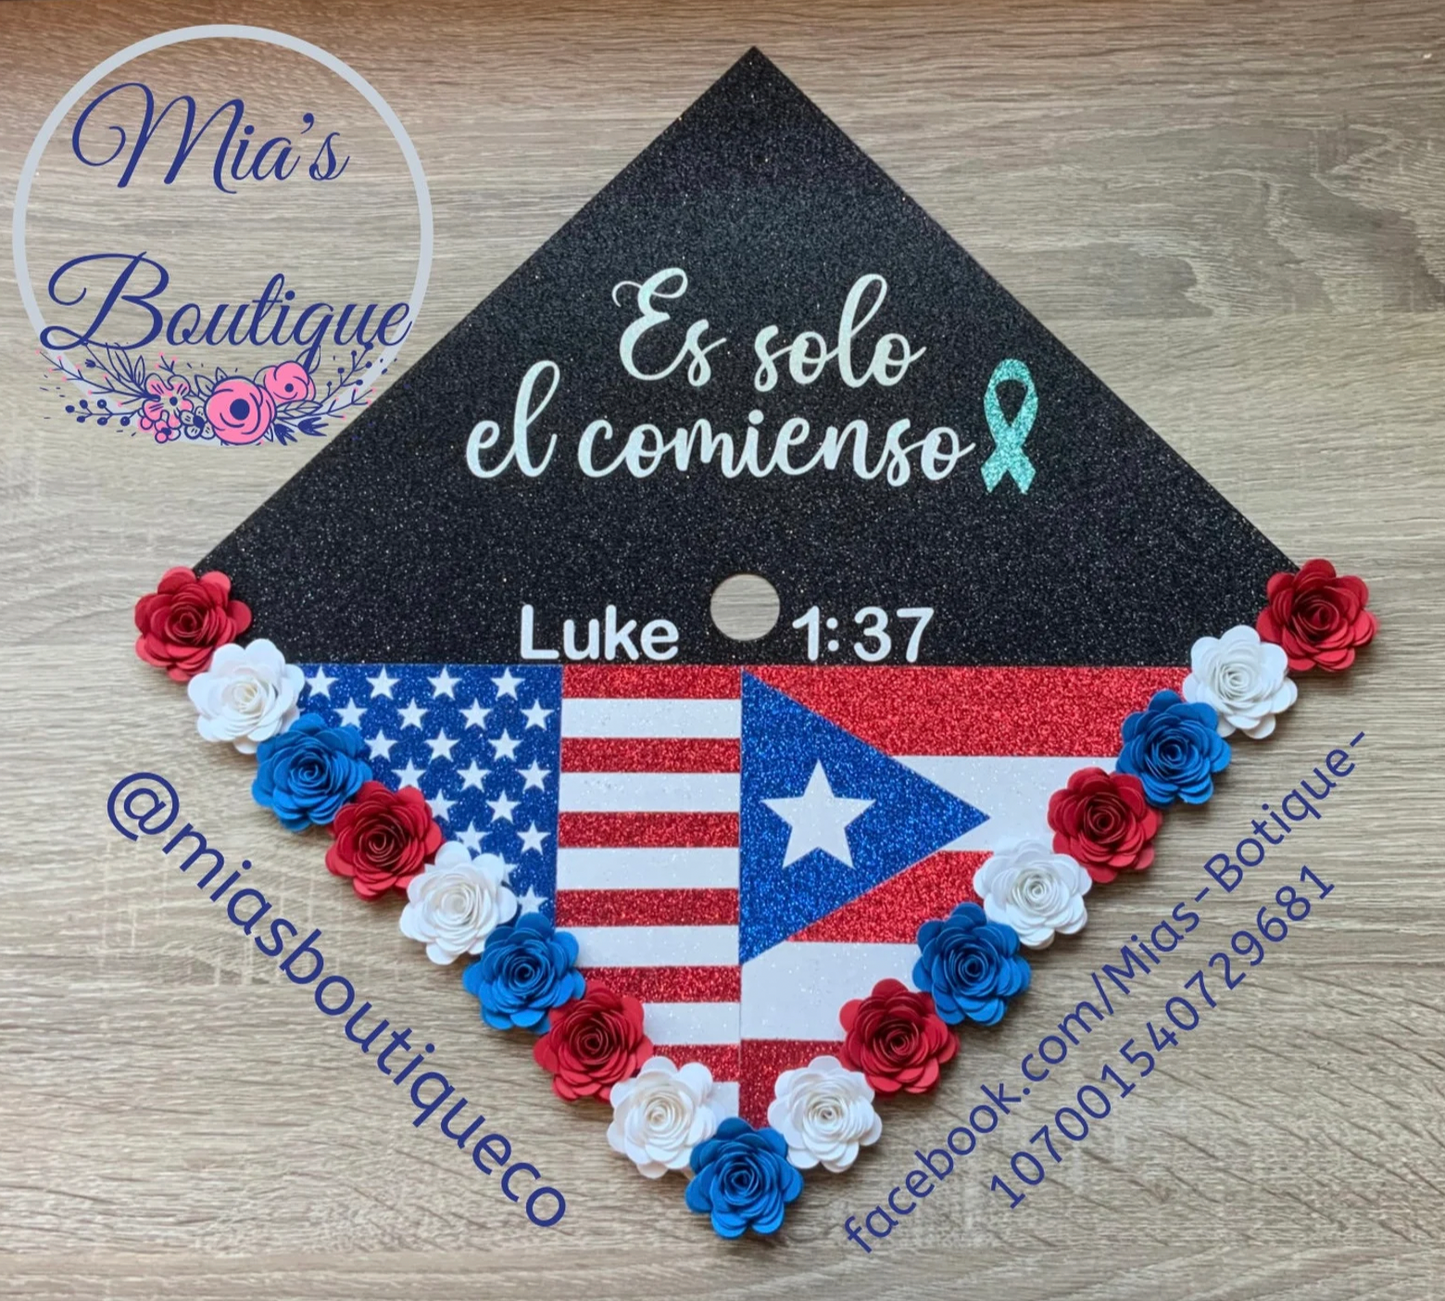 Puerto Rico Graduation Cap / US and Puerto Rico Graduation Cap cover